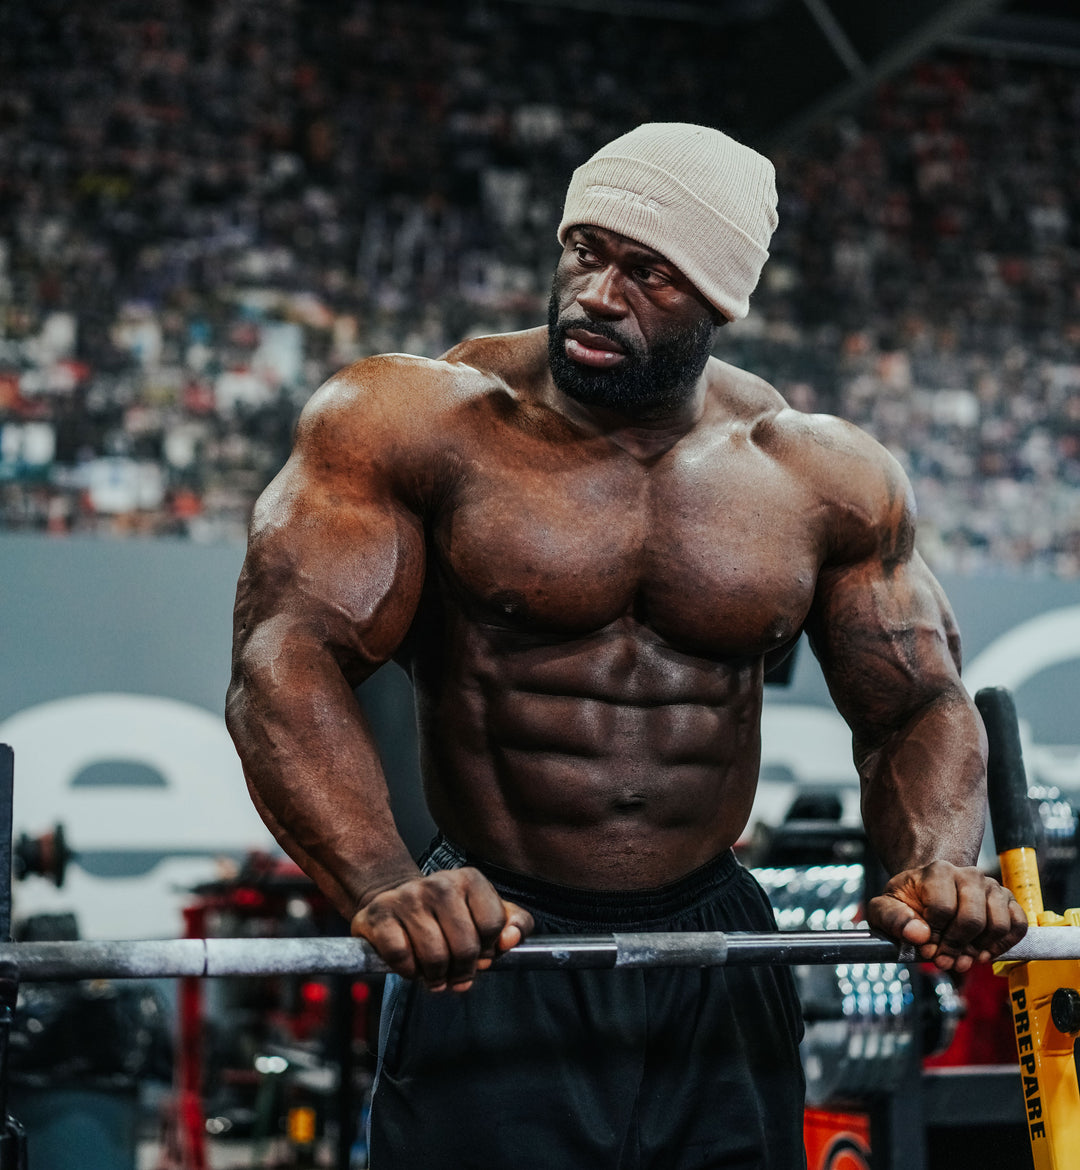 Bodybuilder Samson Dauda training shoulders in the gym